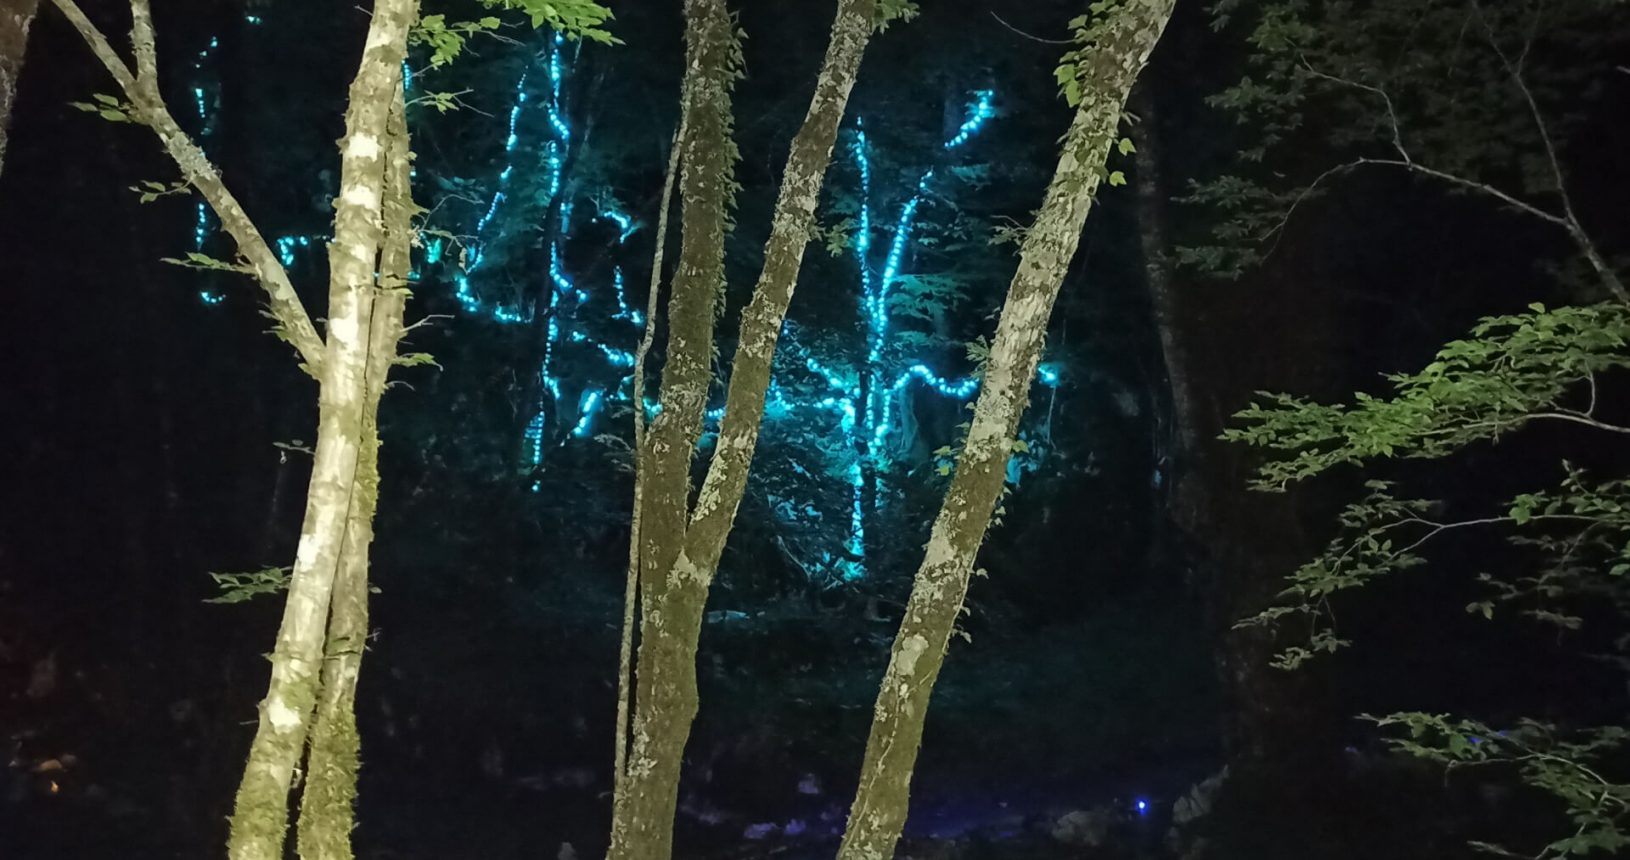 Light decorations through the trees lightland park